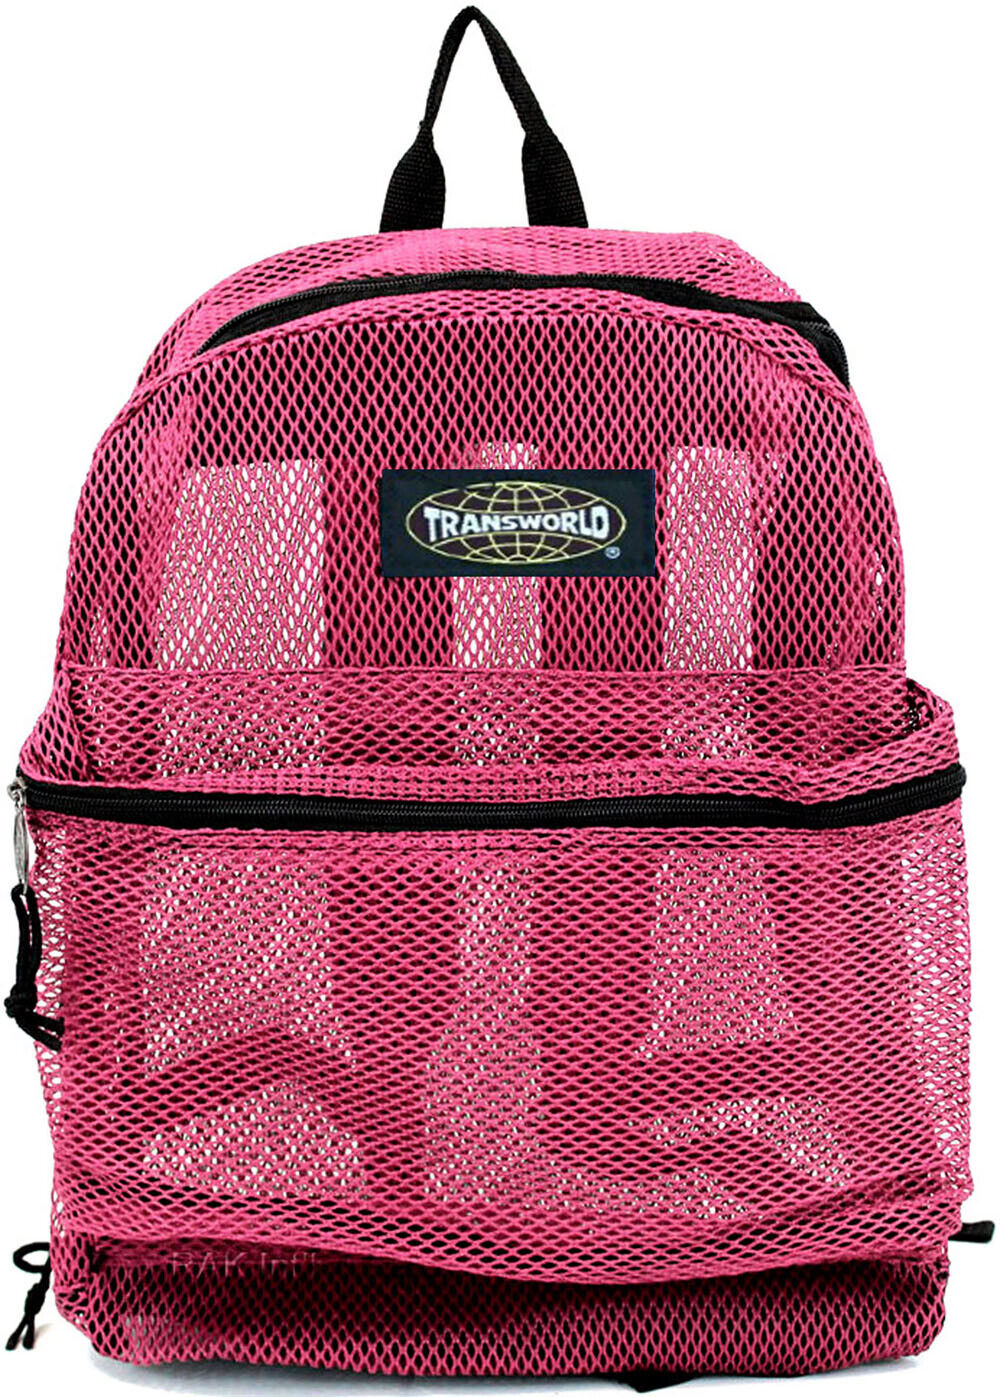 New See Through Mesh Backpack/Book Bag/Hike/School Backpack - Free Shipping